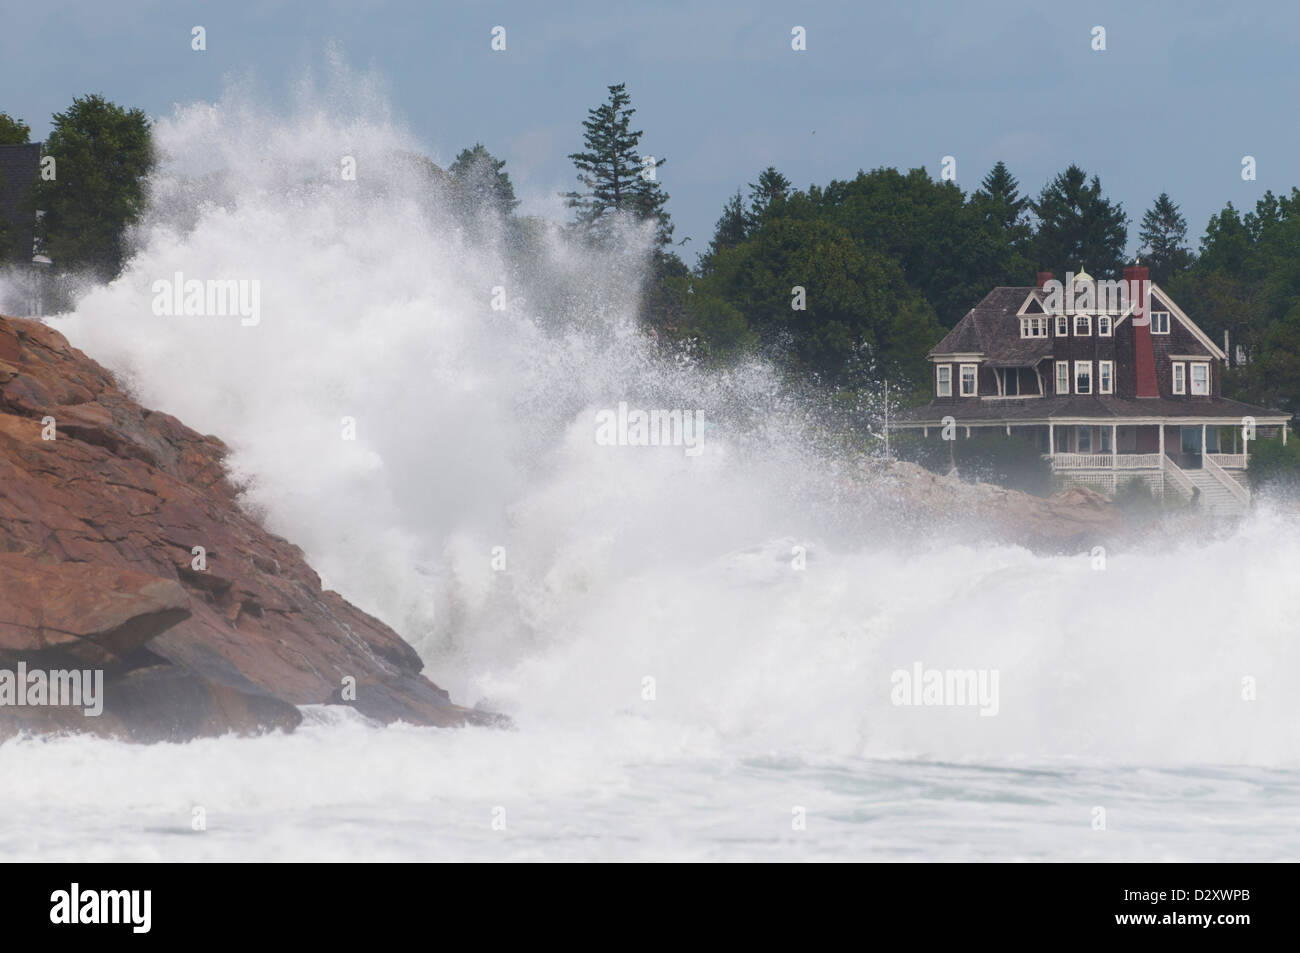 Hurricane generated waves crashing on the rocky shoreline of Short Sands Beach, York, Maine USA Stock Photo